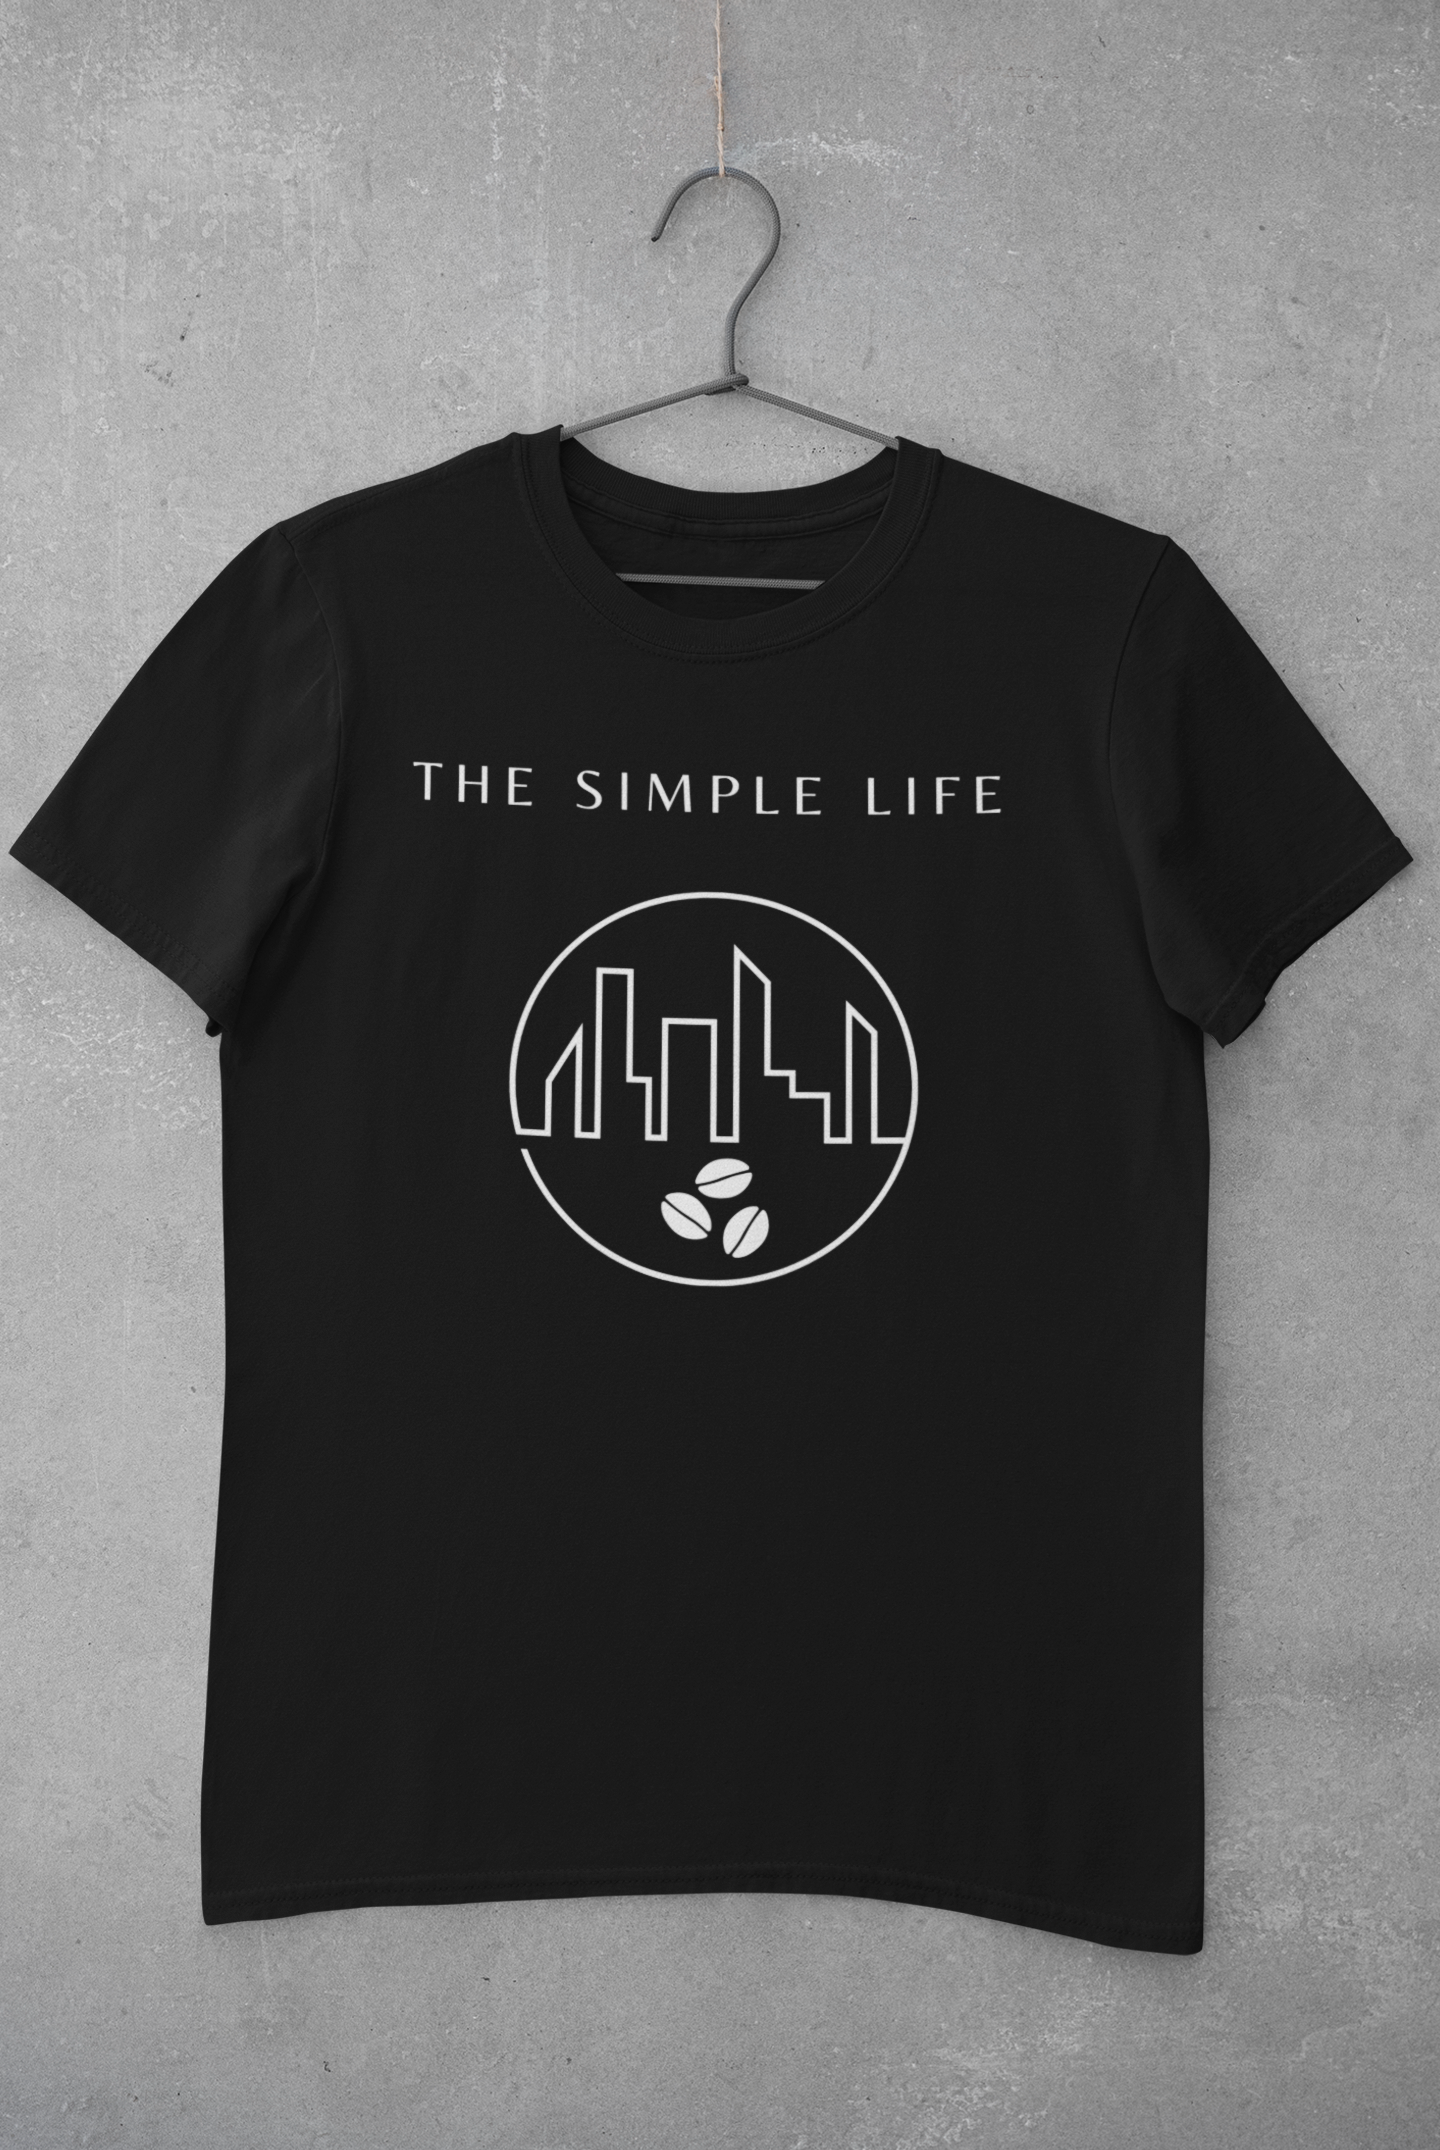 The Simple Life coffee LOGO white/black cotton t-shirt